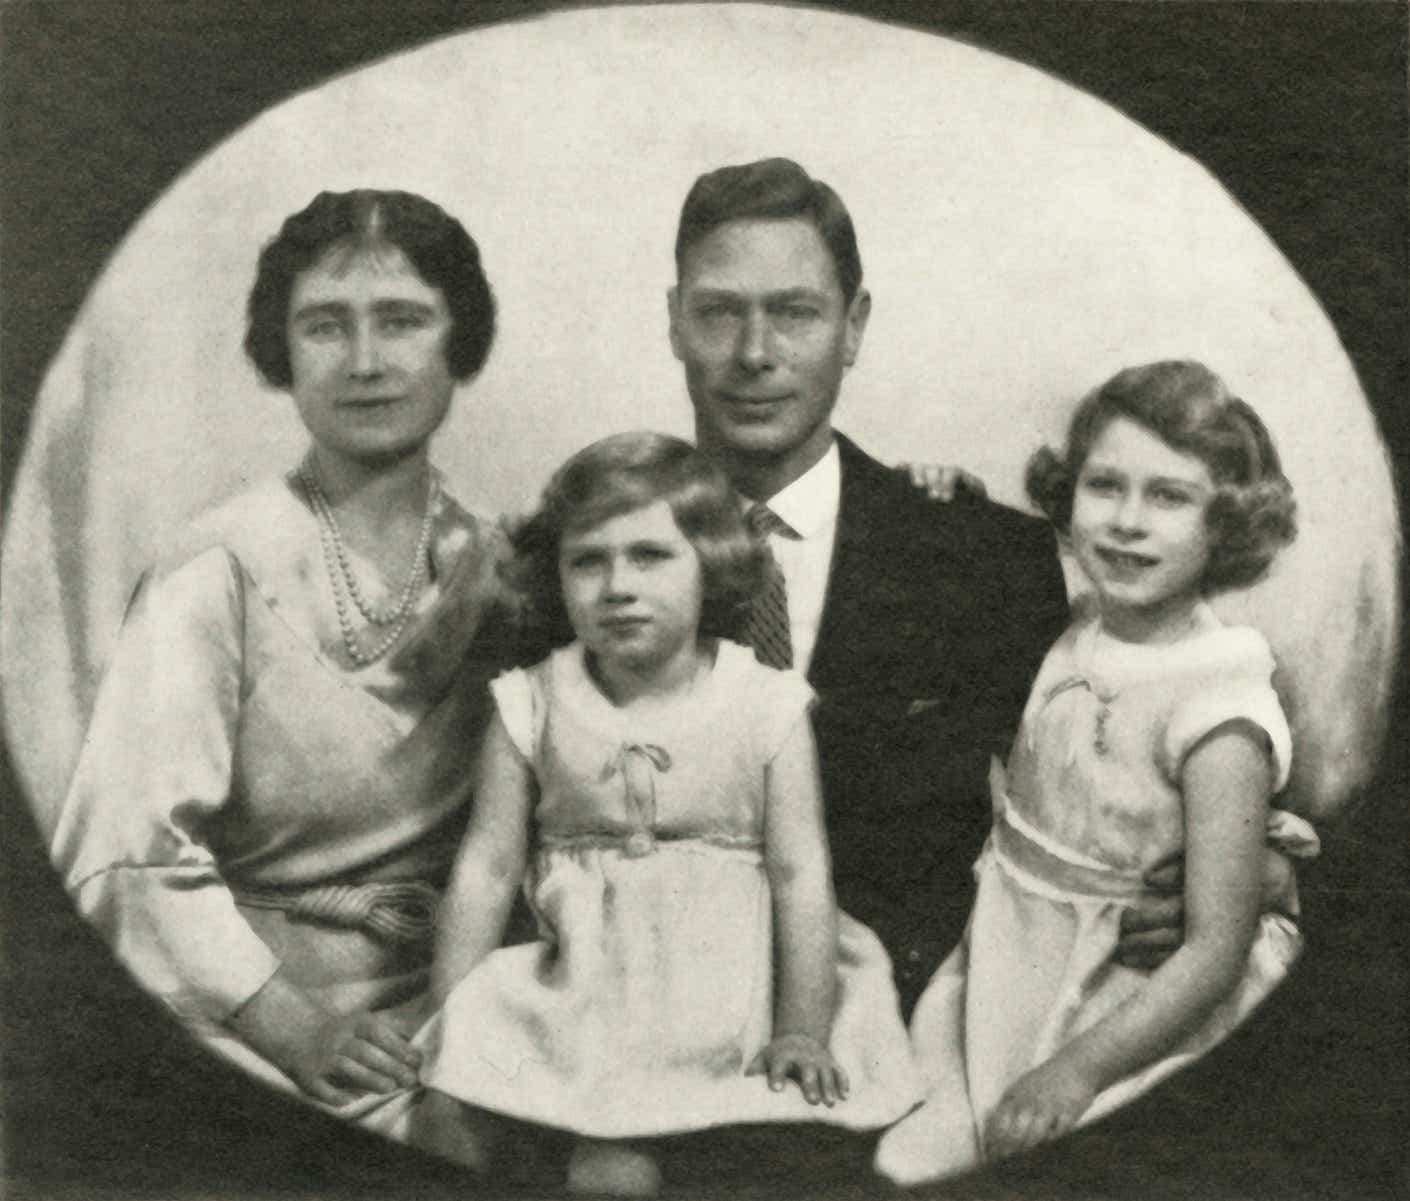 A portrait of the future Royal Family circa 1933.